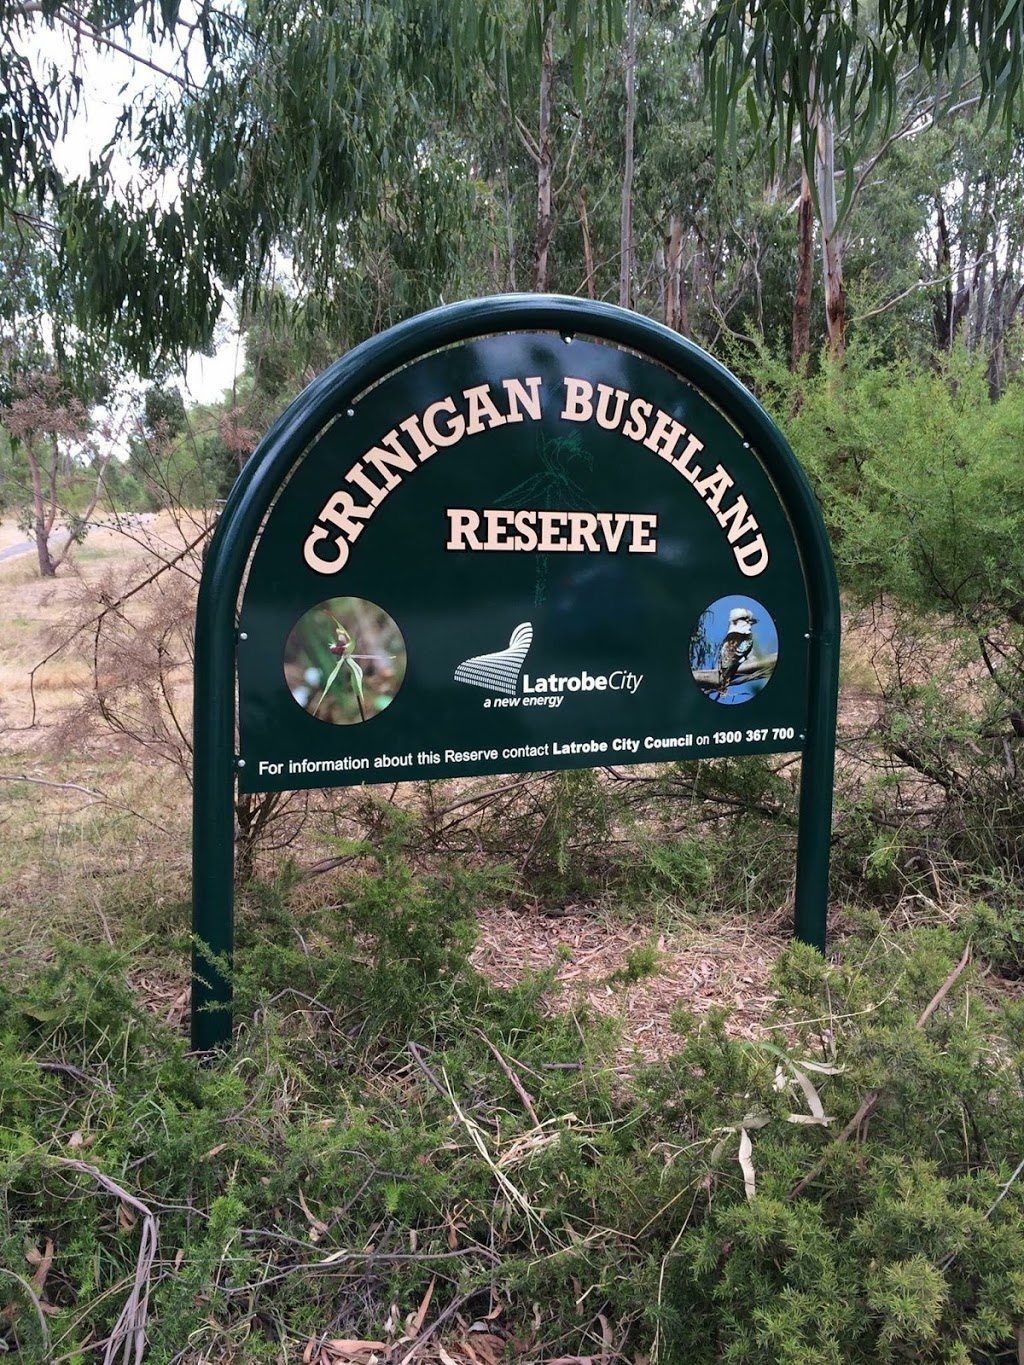 Crinigan Bushland Reserve | Morwell-Maryvale Rd, Morwell VIC 3840, Australia